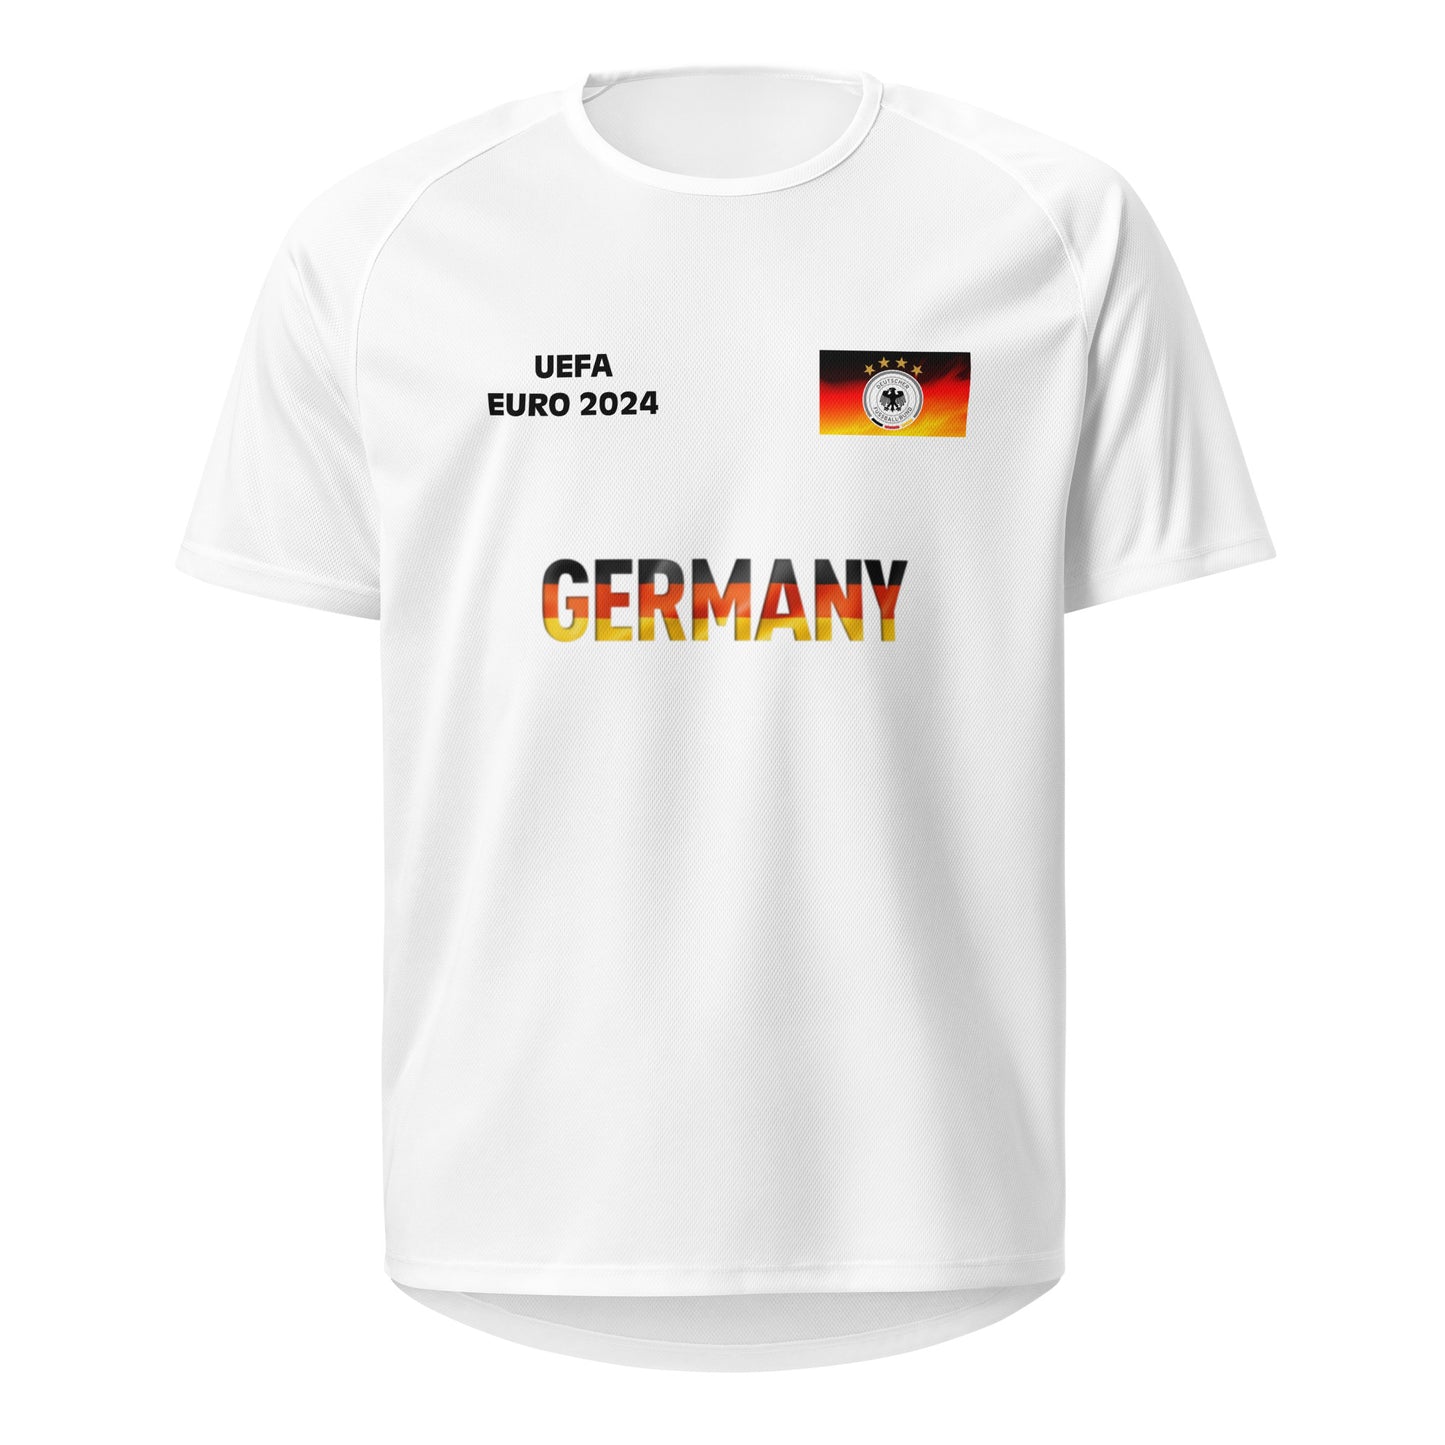 Unisex Germany jersey